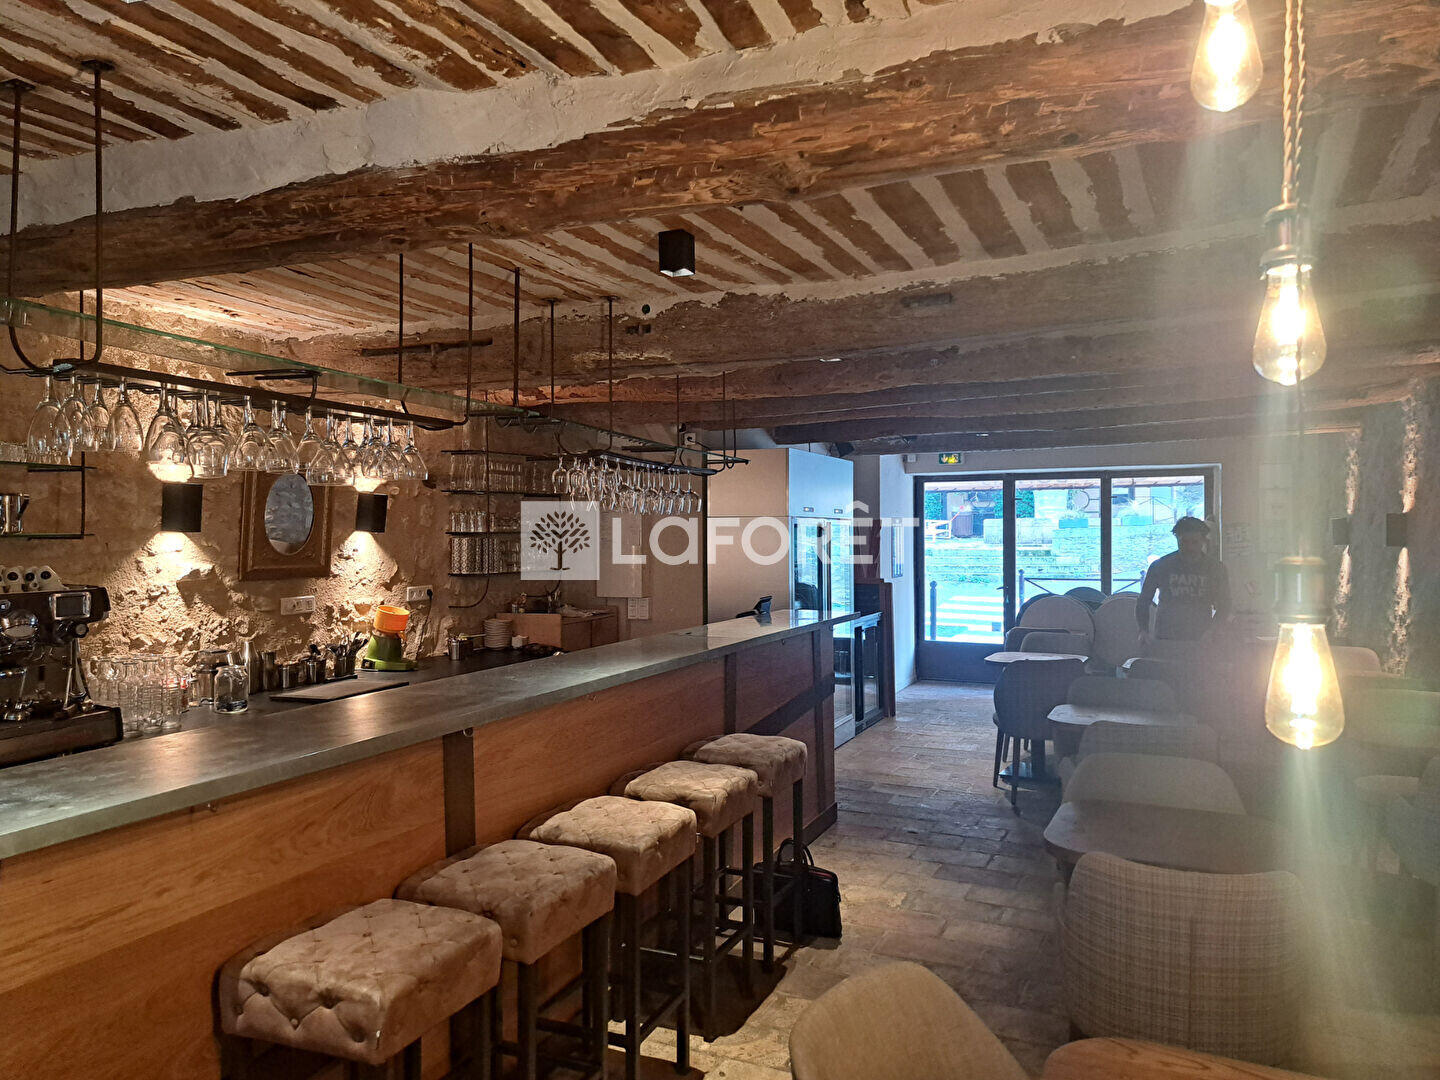 Vente restaurant bar à vin licence IV en Luberon